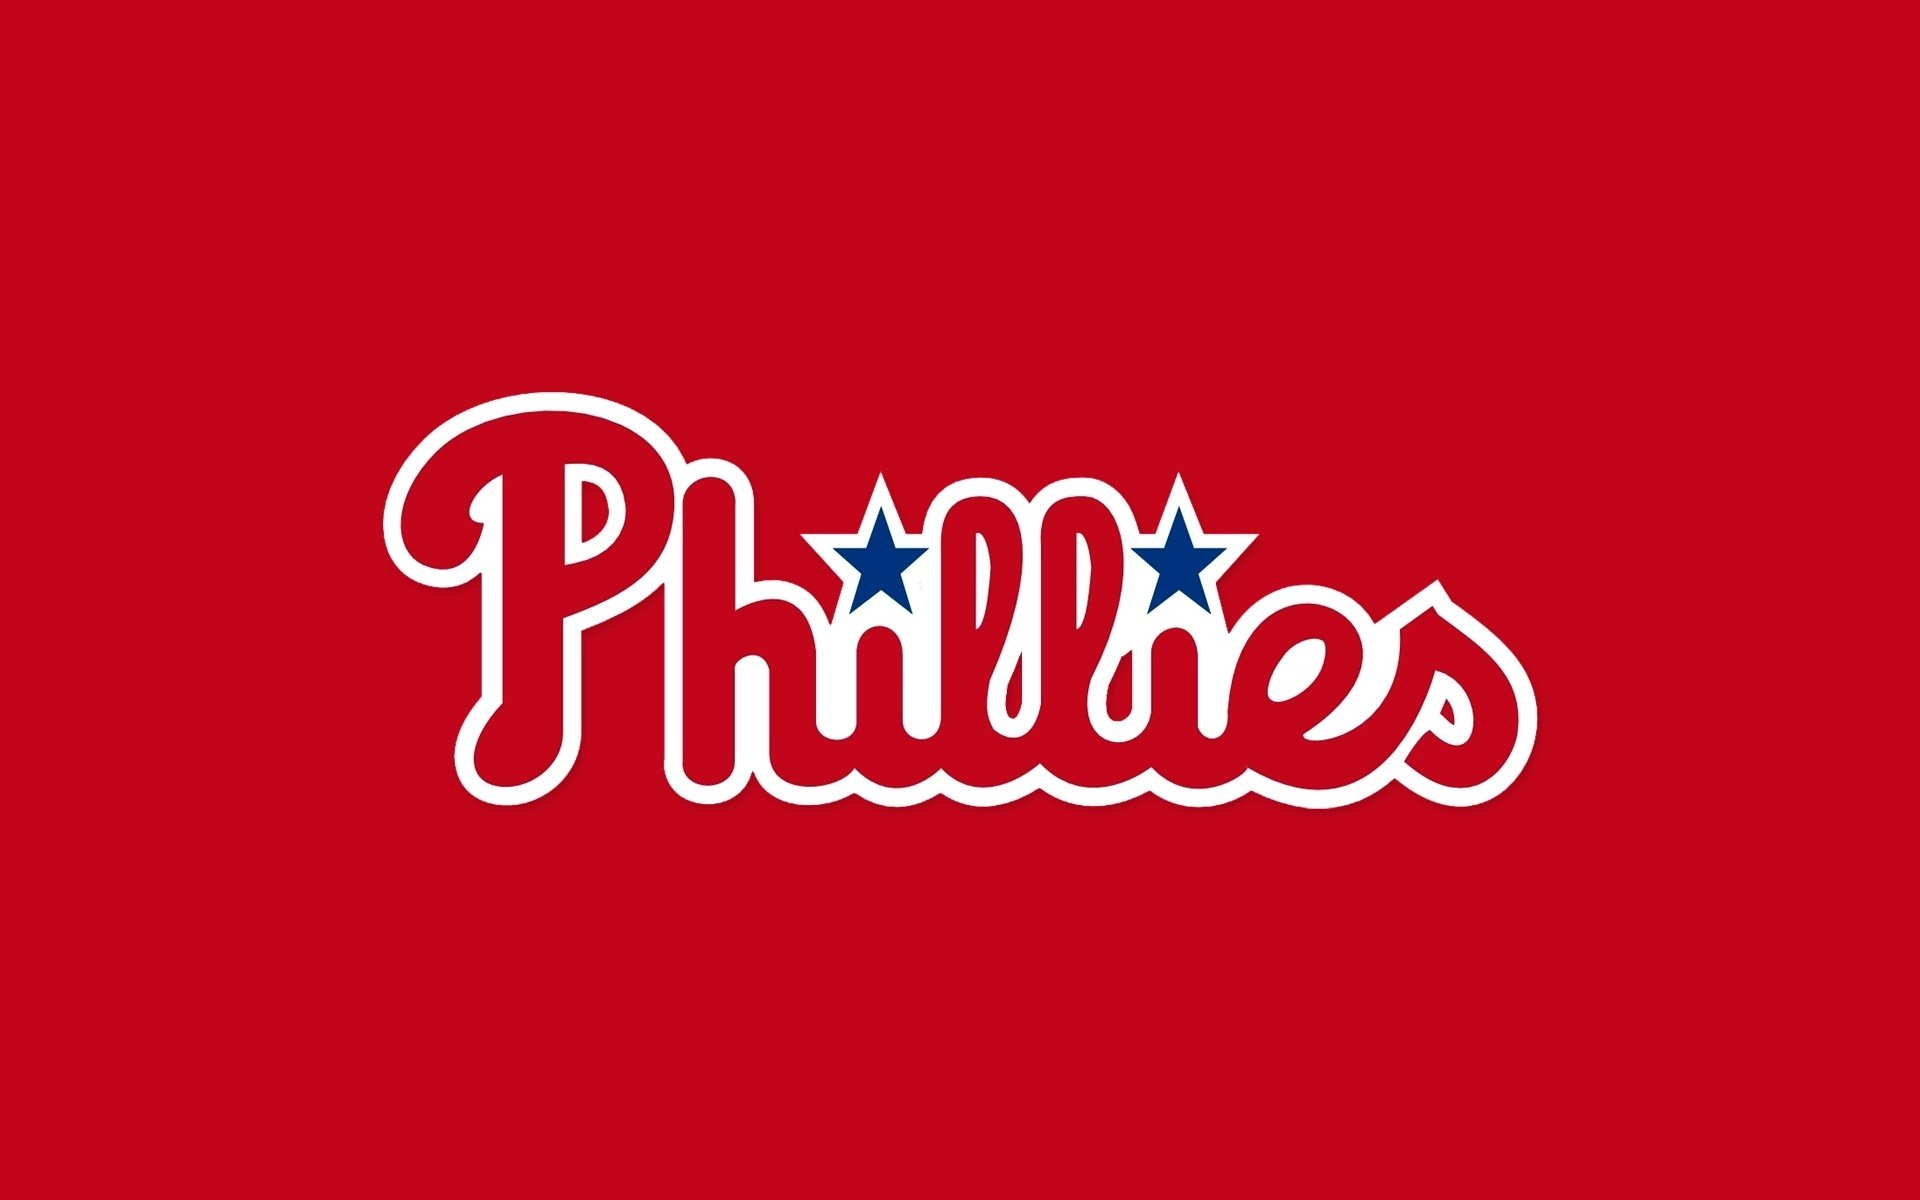 1920x1200 Philadelphia Phillies HD Wallpaper